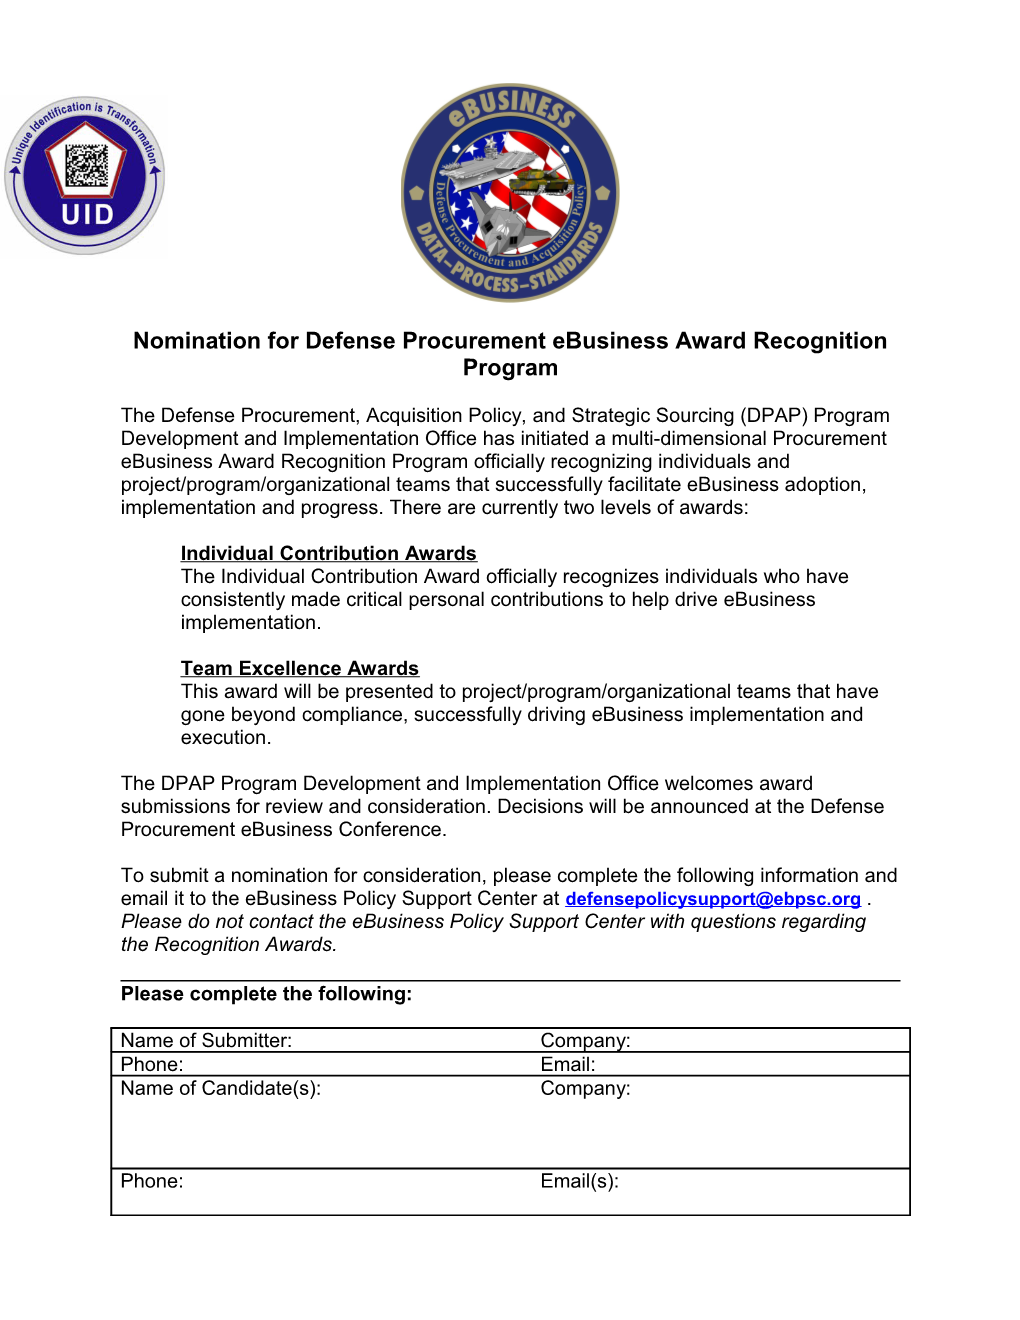 Nomination for Defense Procurement Ebusiness Award Recognition Program